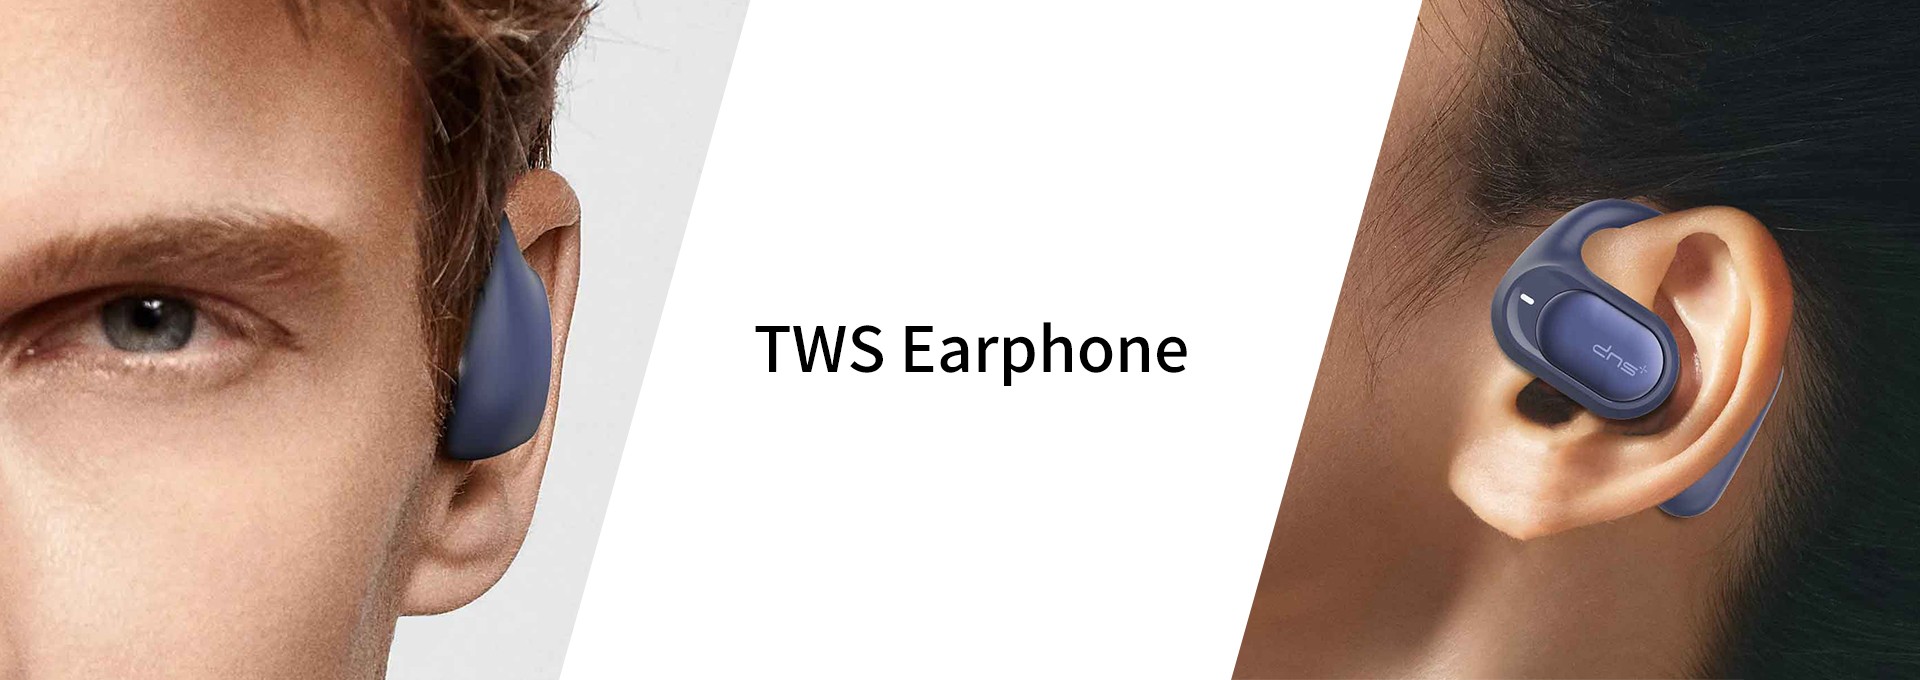 TWS Earphone